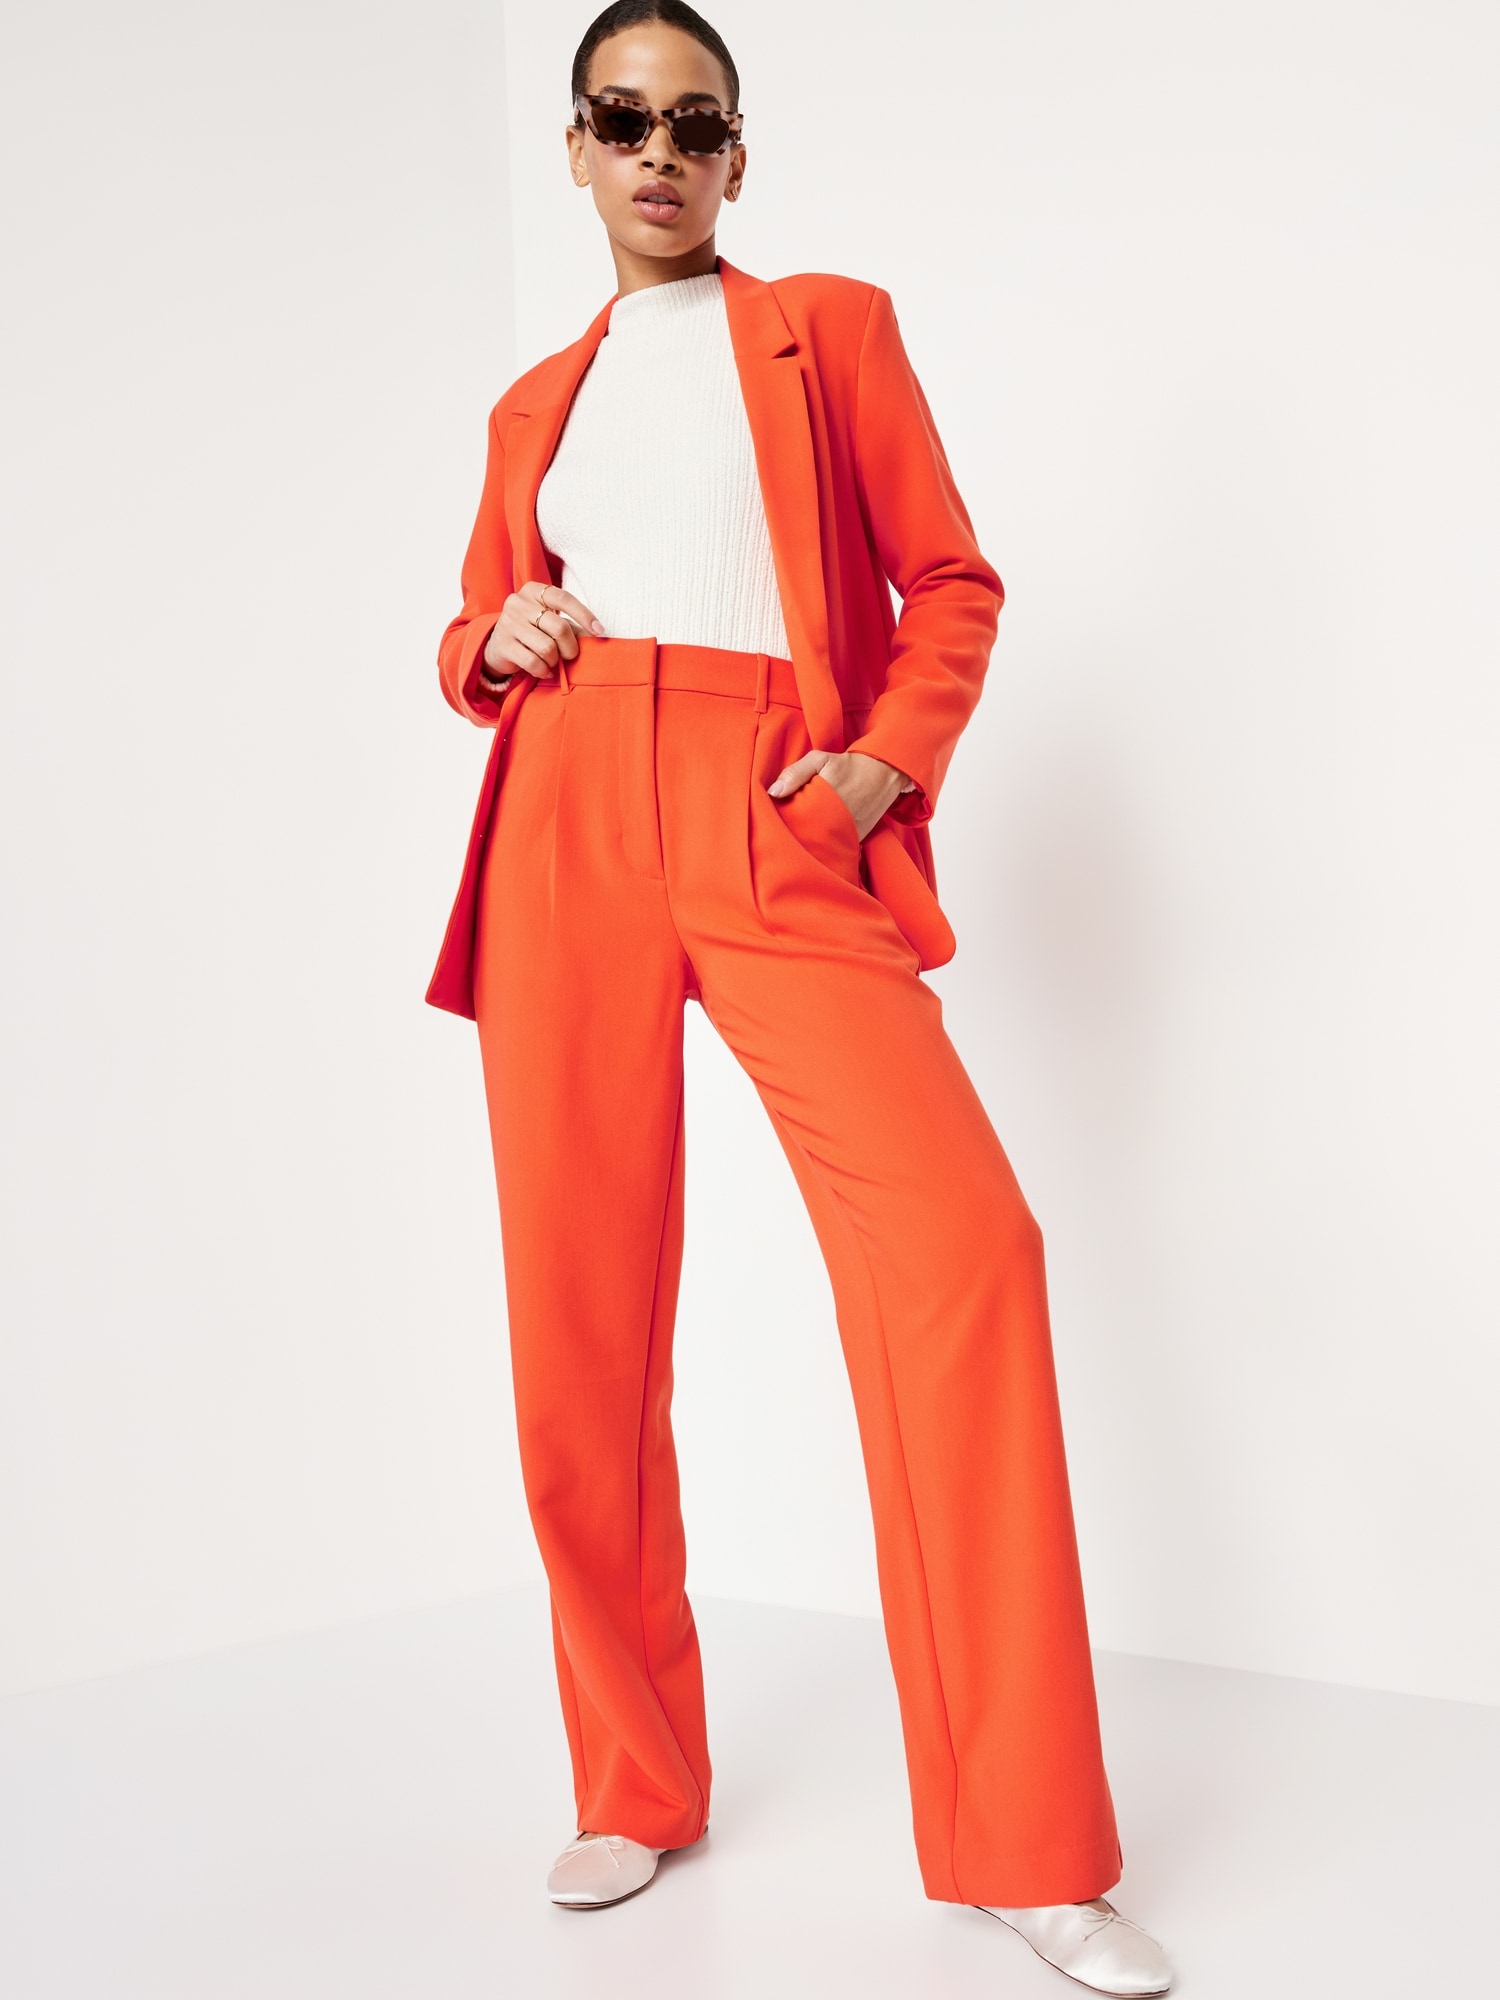 Orange blazer  Blazer outfits for women, Orange blazer outfits, Orange  shirt outfit